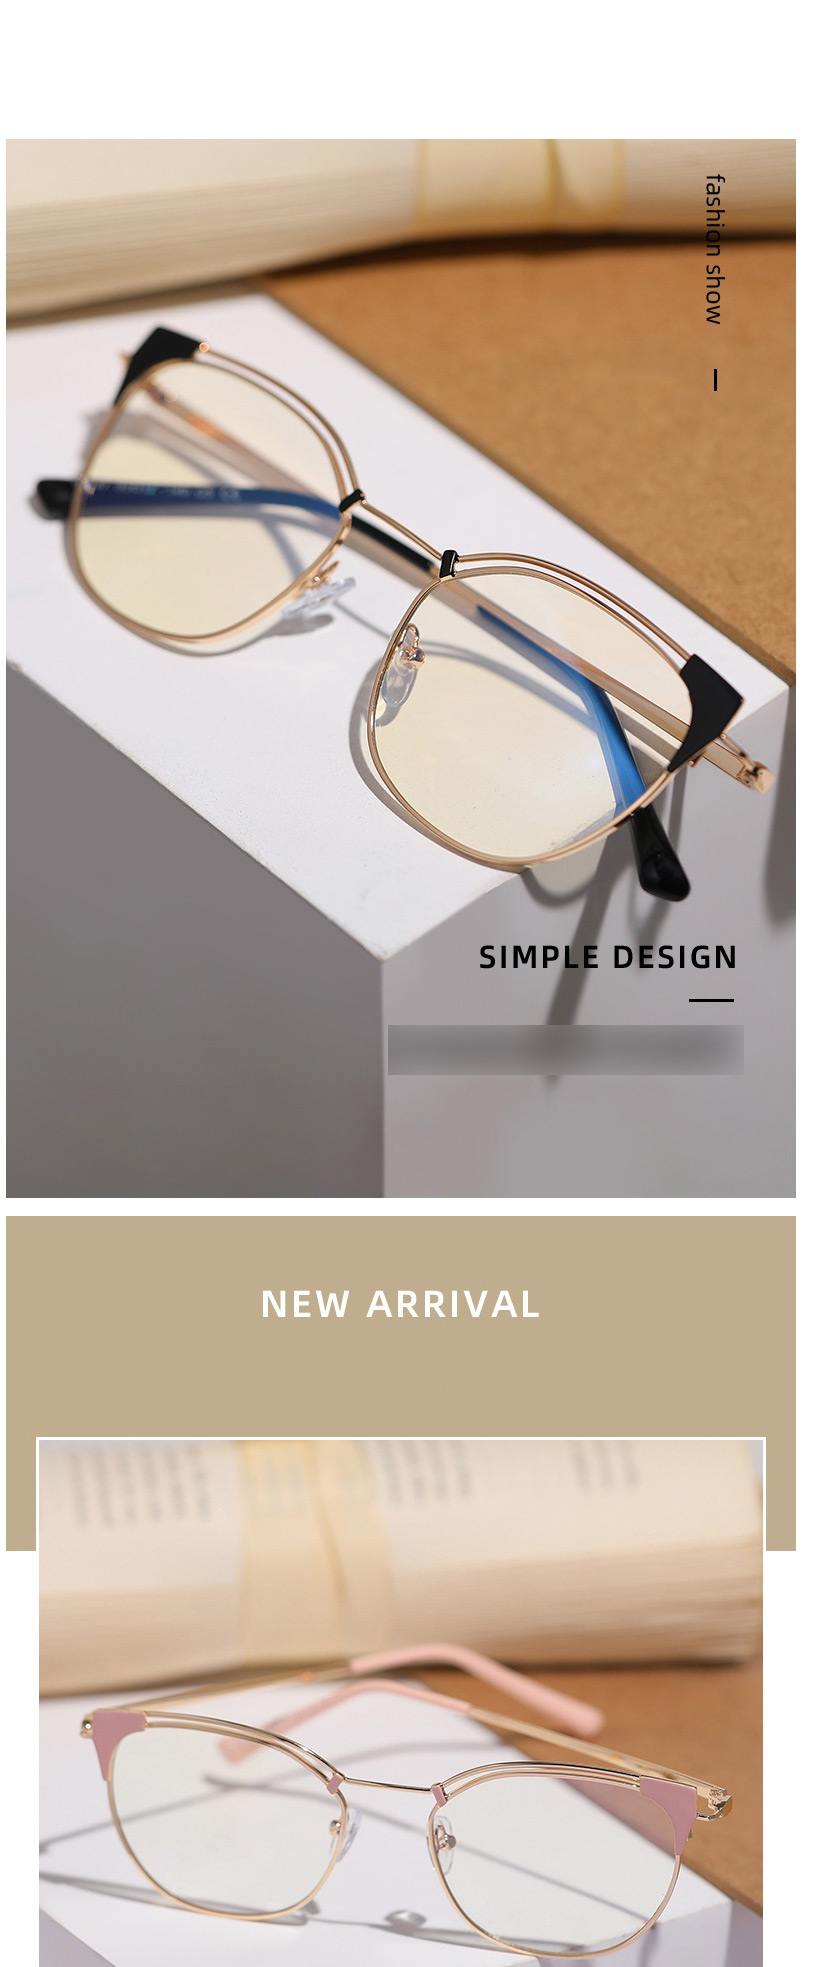 Fashion C8 White/anti-blue Light Metal Anti-blue Glasses,Fashion Glasses